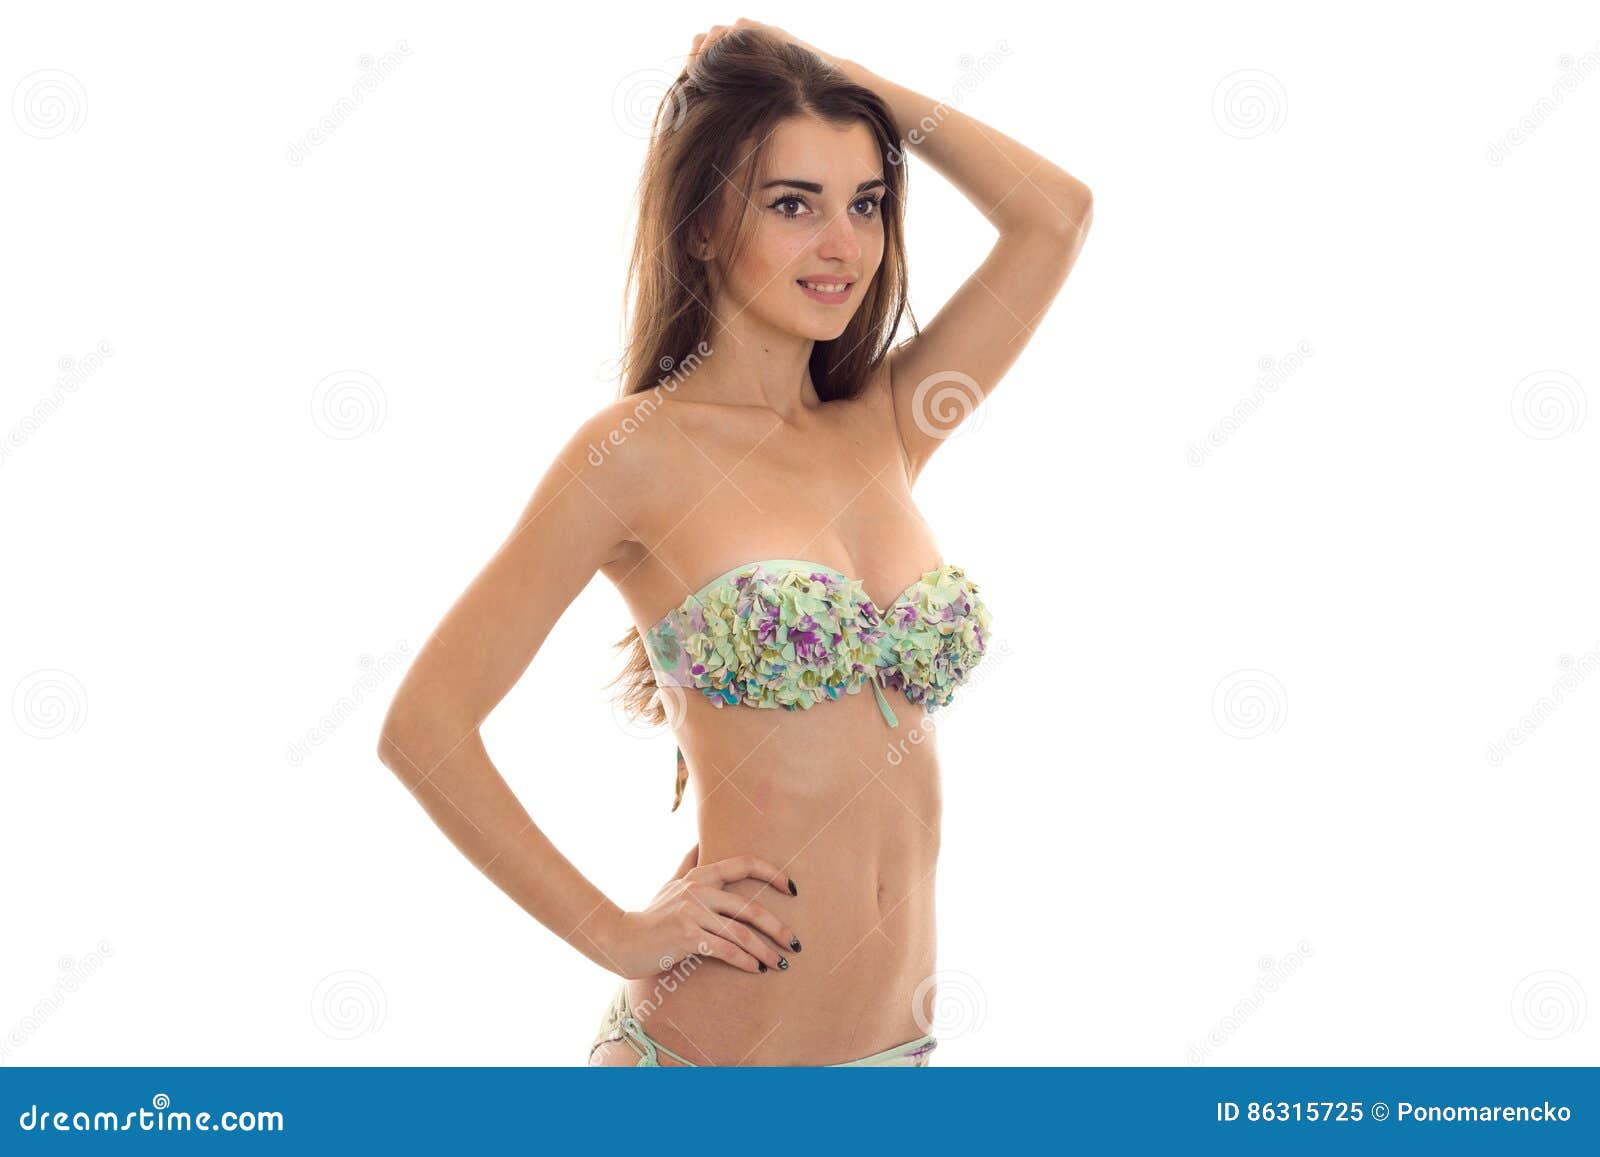 bridgette mosley add skinny teen large breasts photo